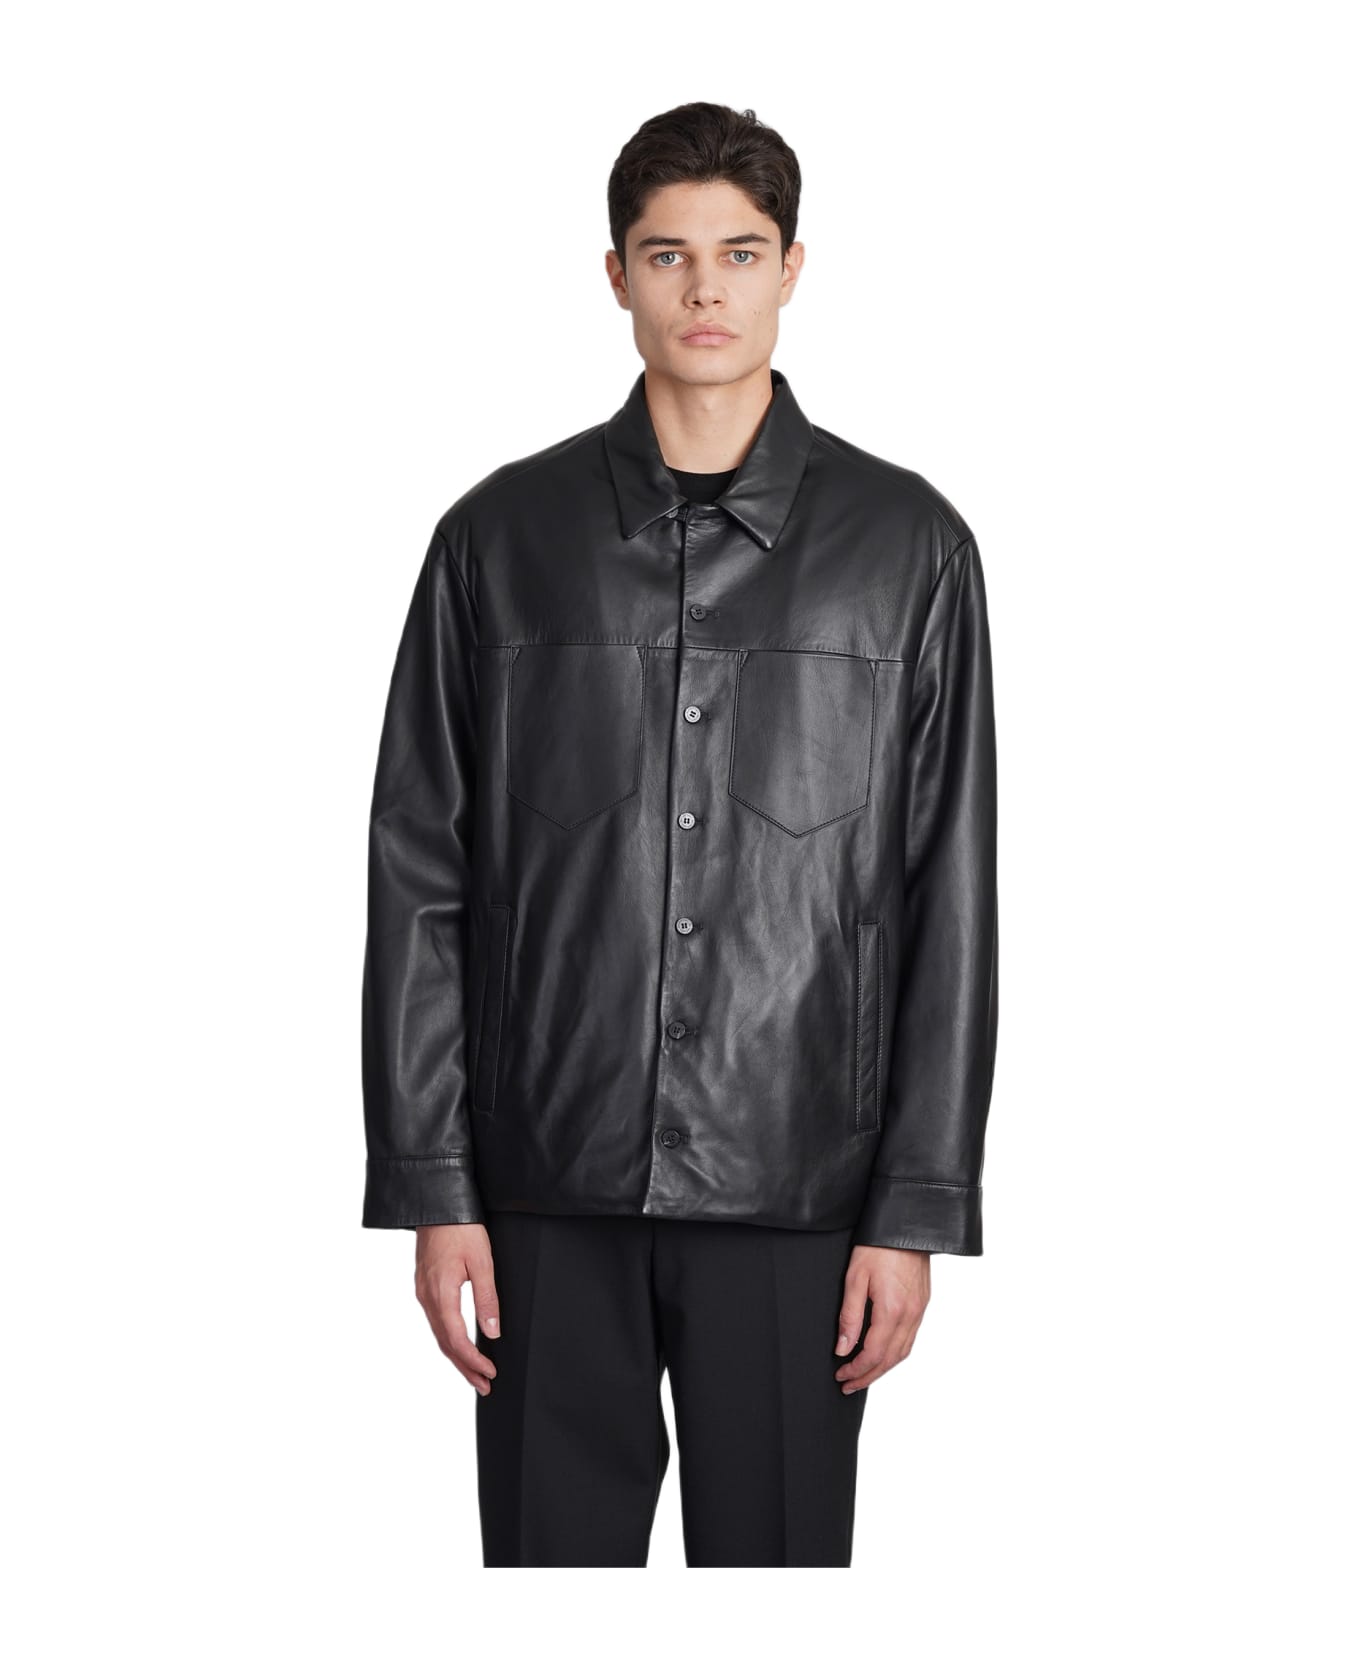 Neil Barrett Leather Jacket In Black Leather - black